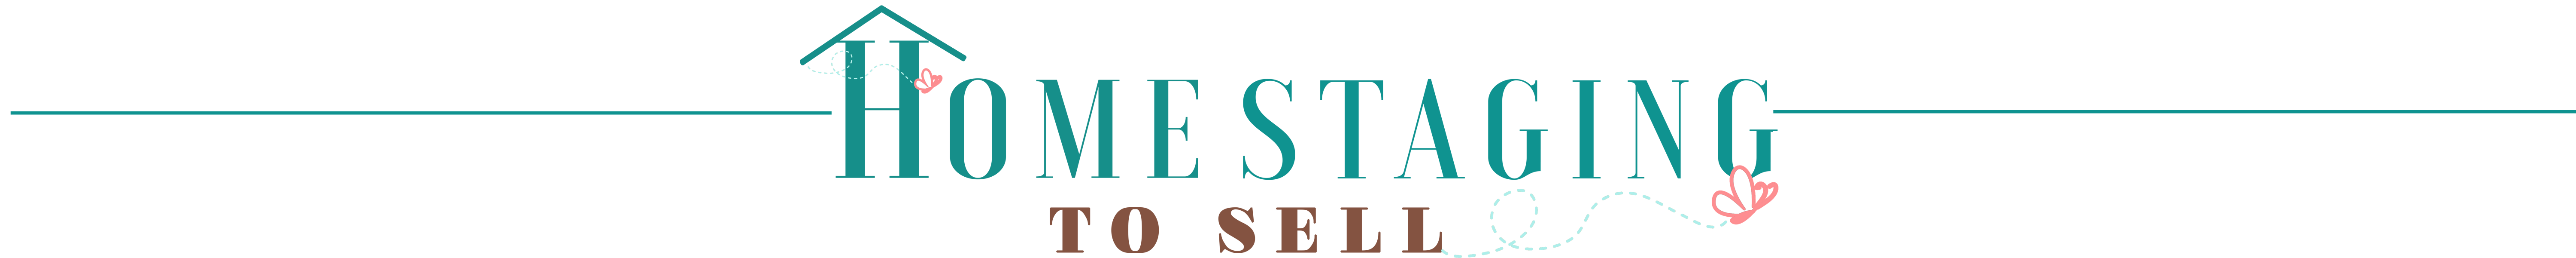 hsts logo